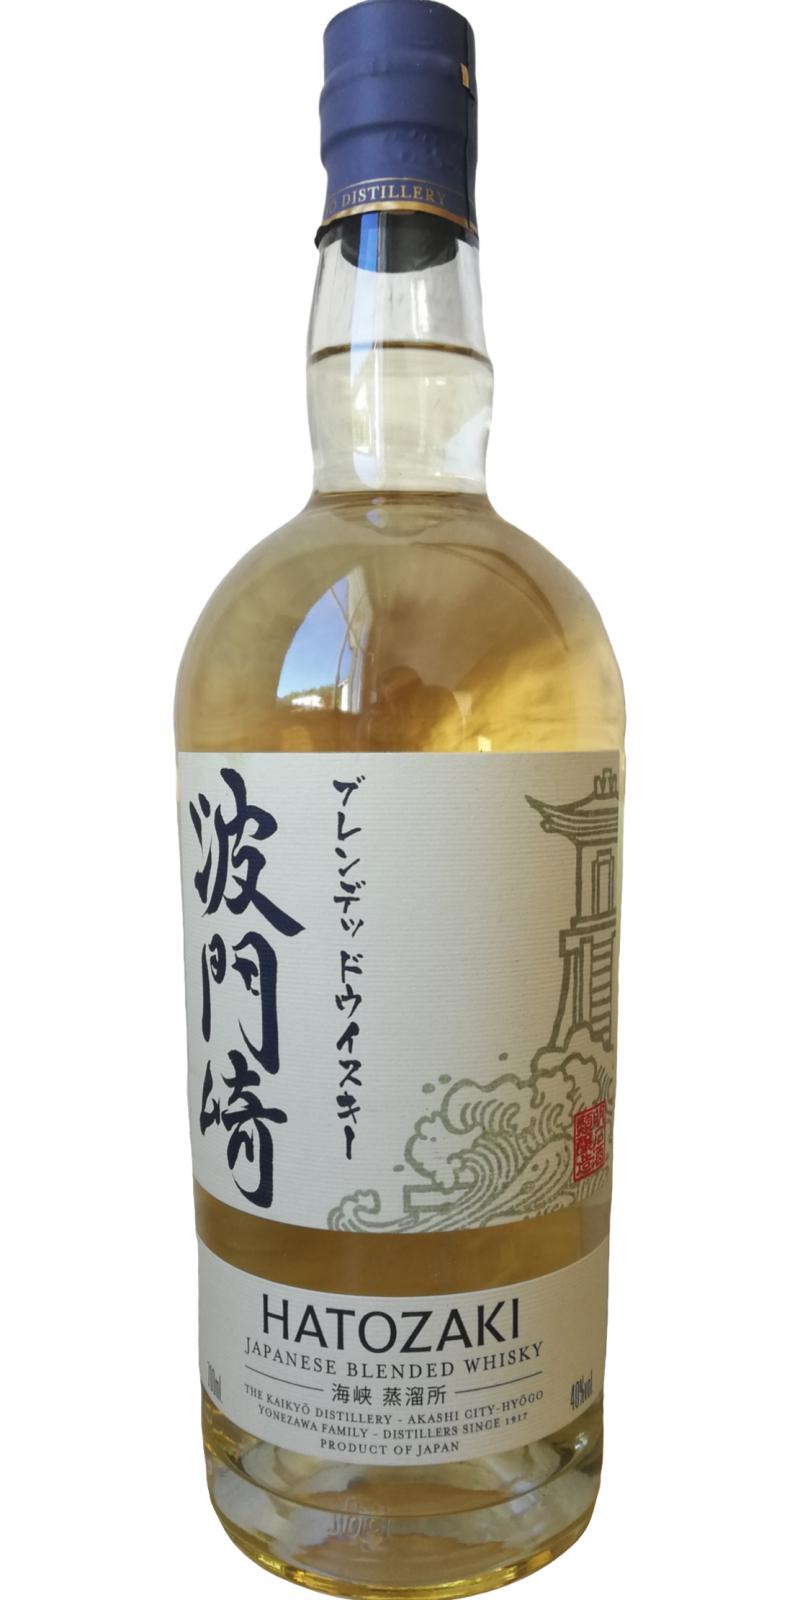 Hatozaki Japanese Blended Whisky - Ratings and reviews - Whiskybase